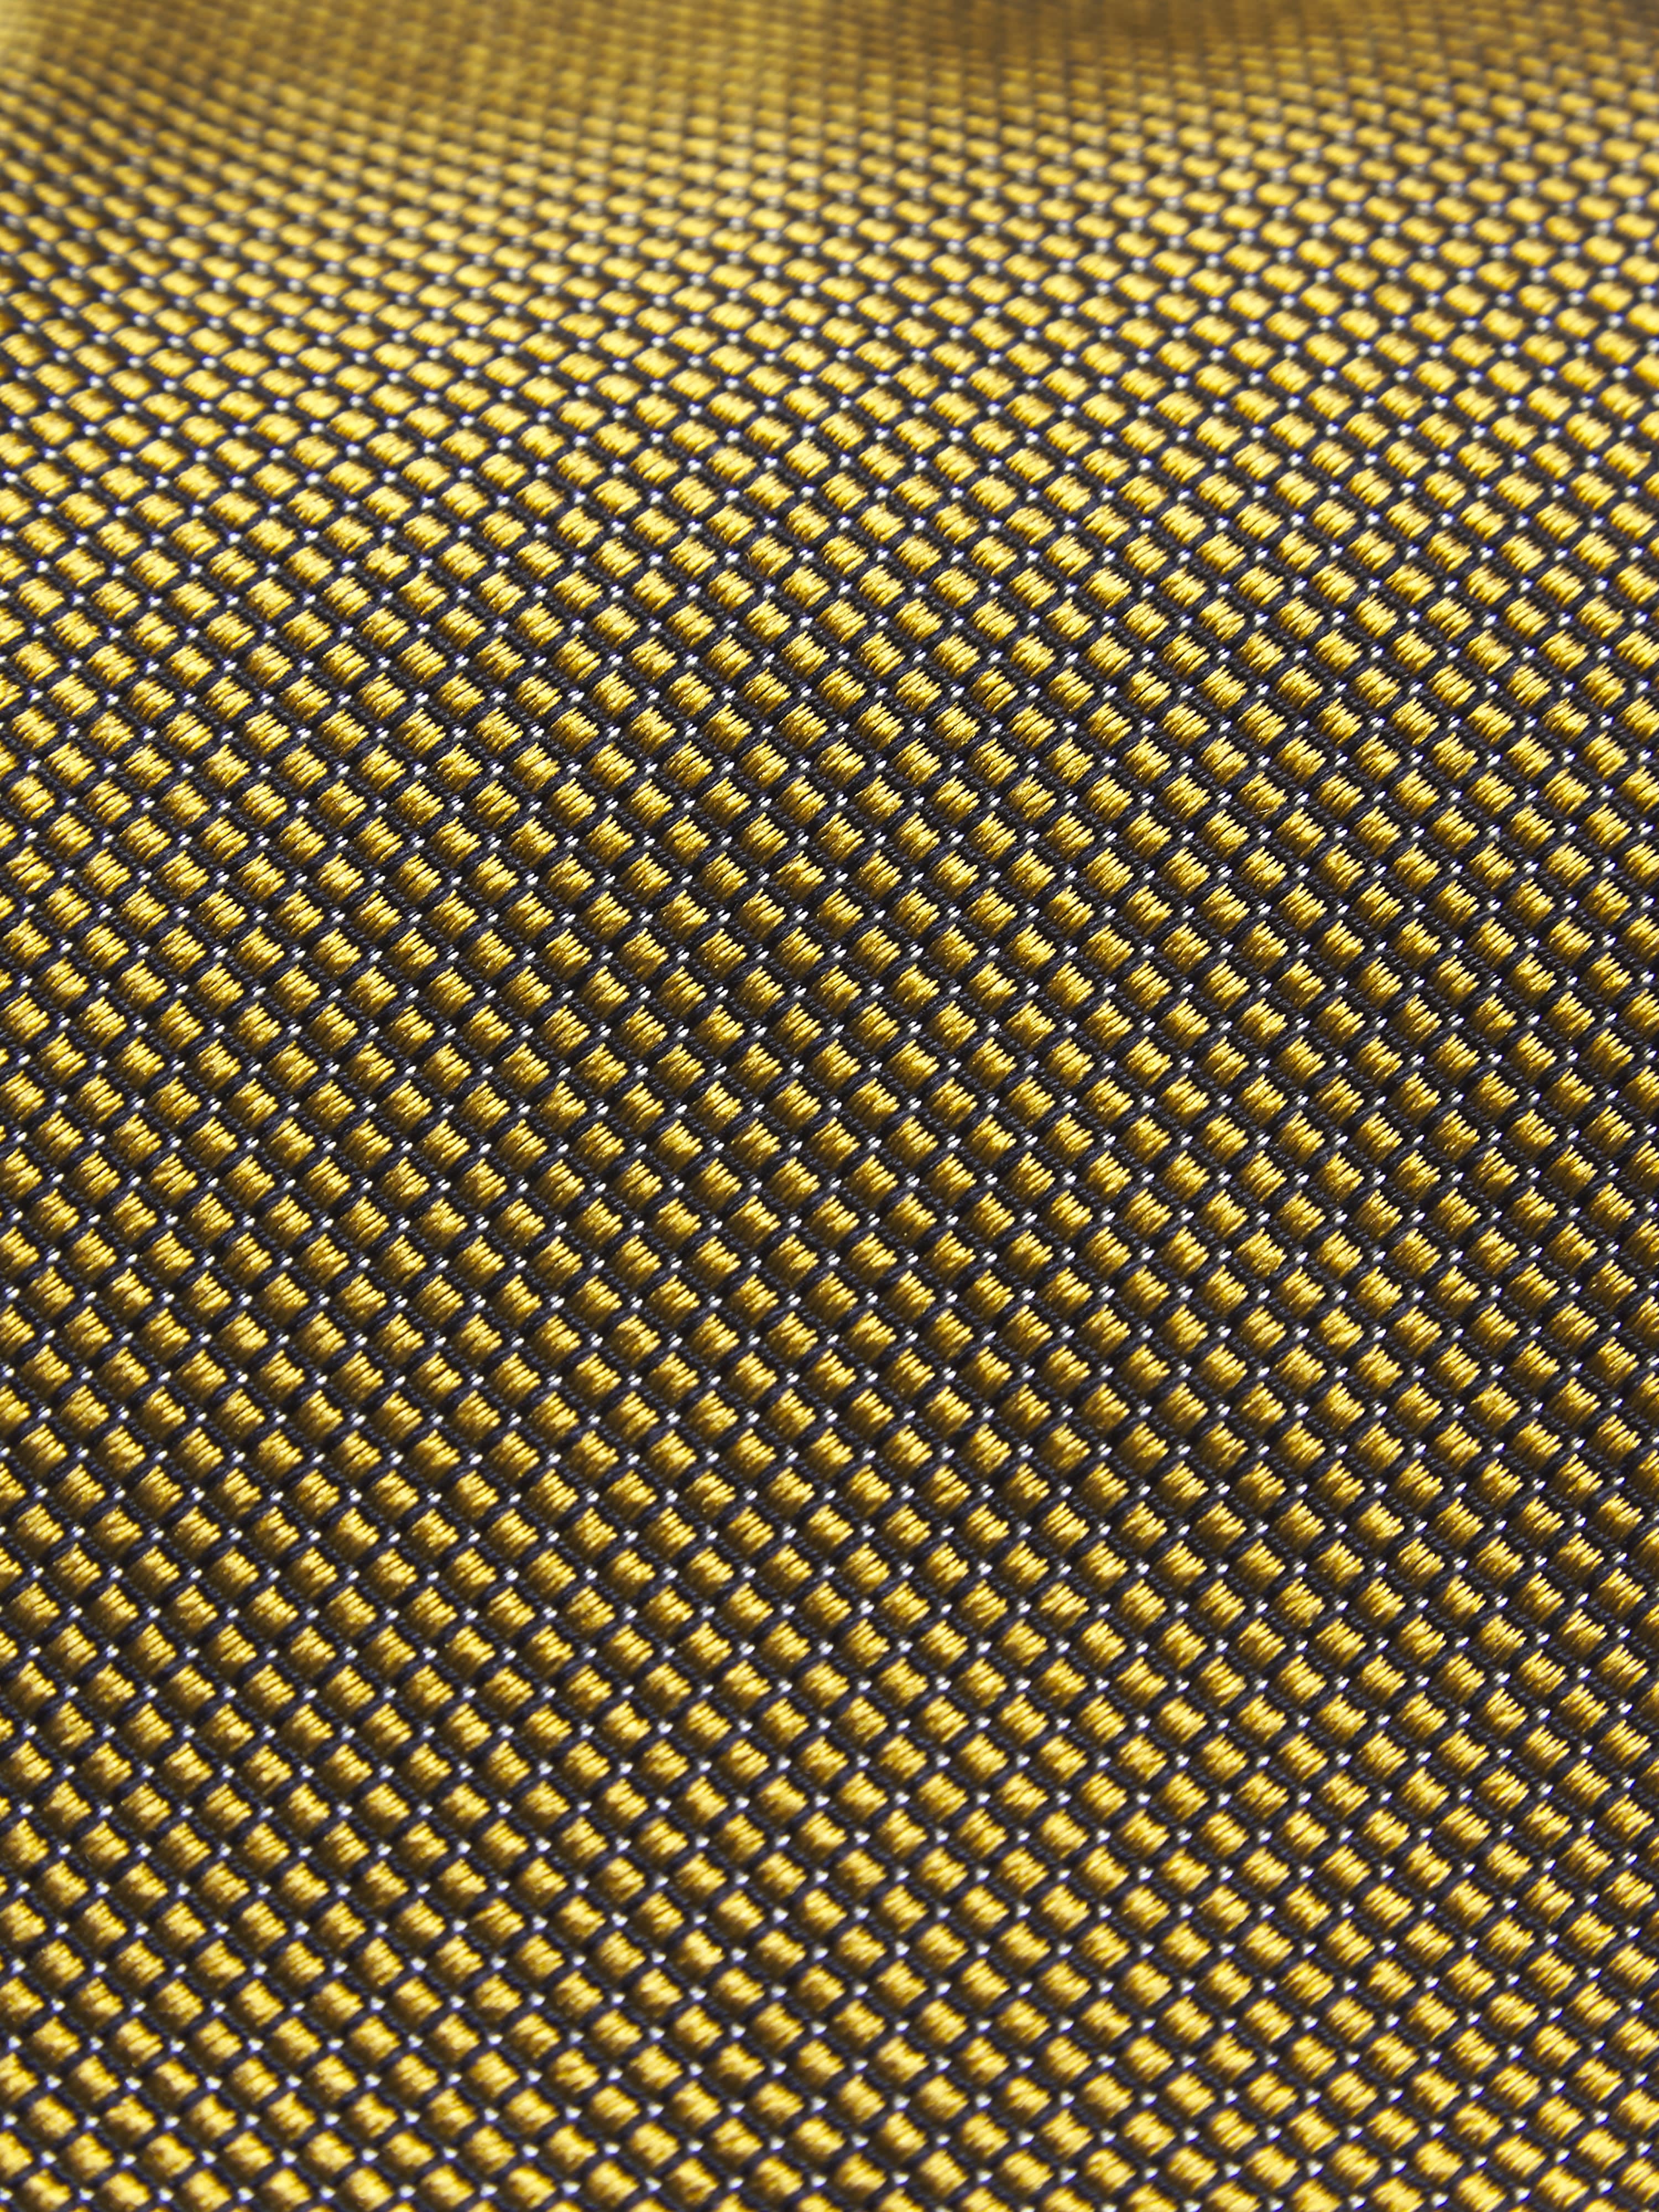 Black silk tie with gold jacquard motif